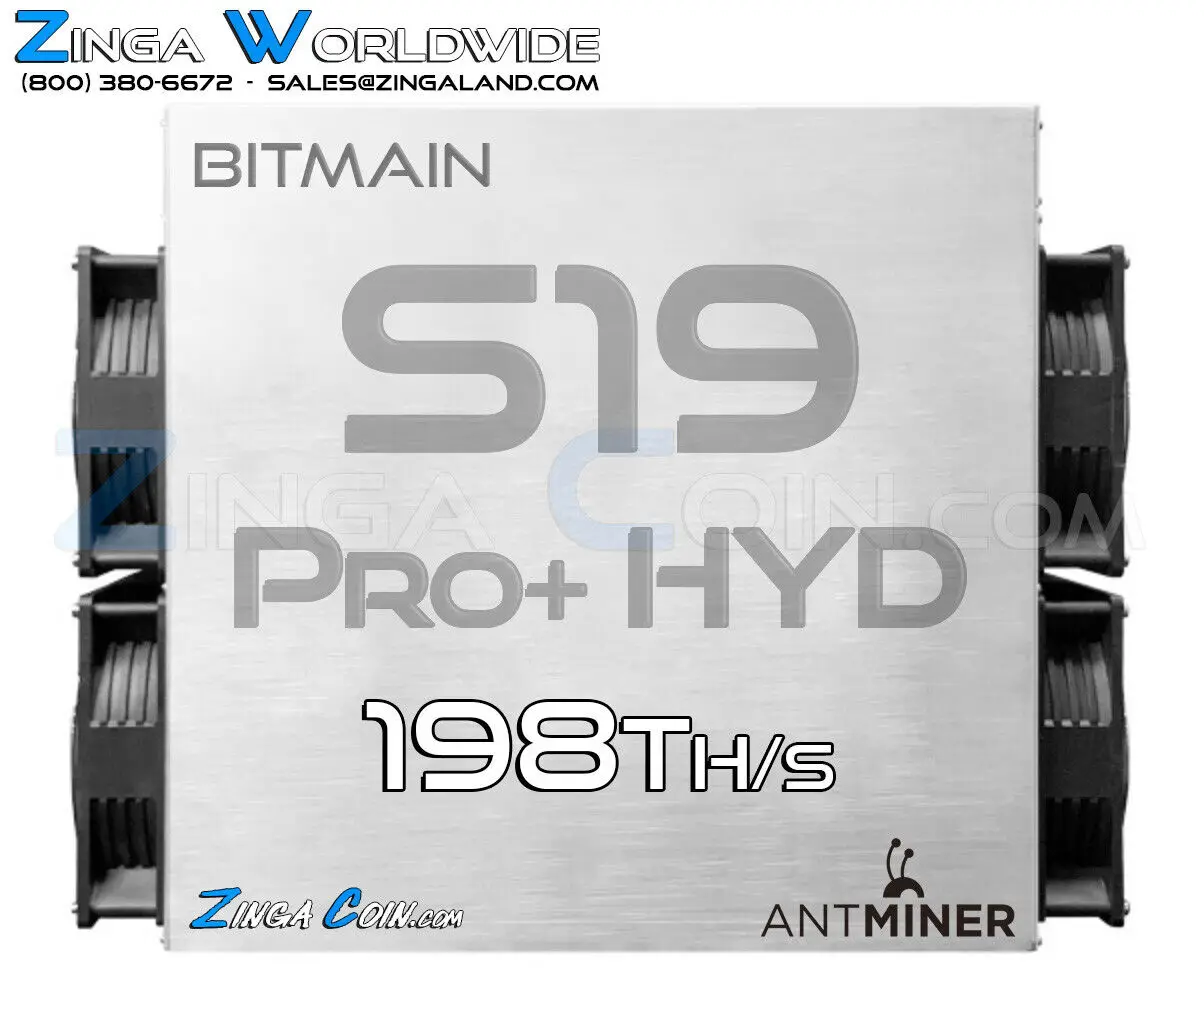 Antminer s19 Pro+Hyd. IBELINK BM-KS Max. IBELINK KS-BM Max 10,5 th/s. Antminer ks3 8.3 th/s цена. S19pro hydro